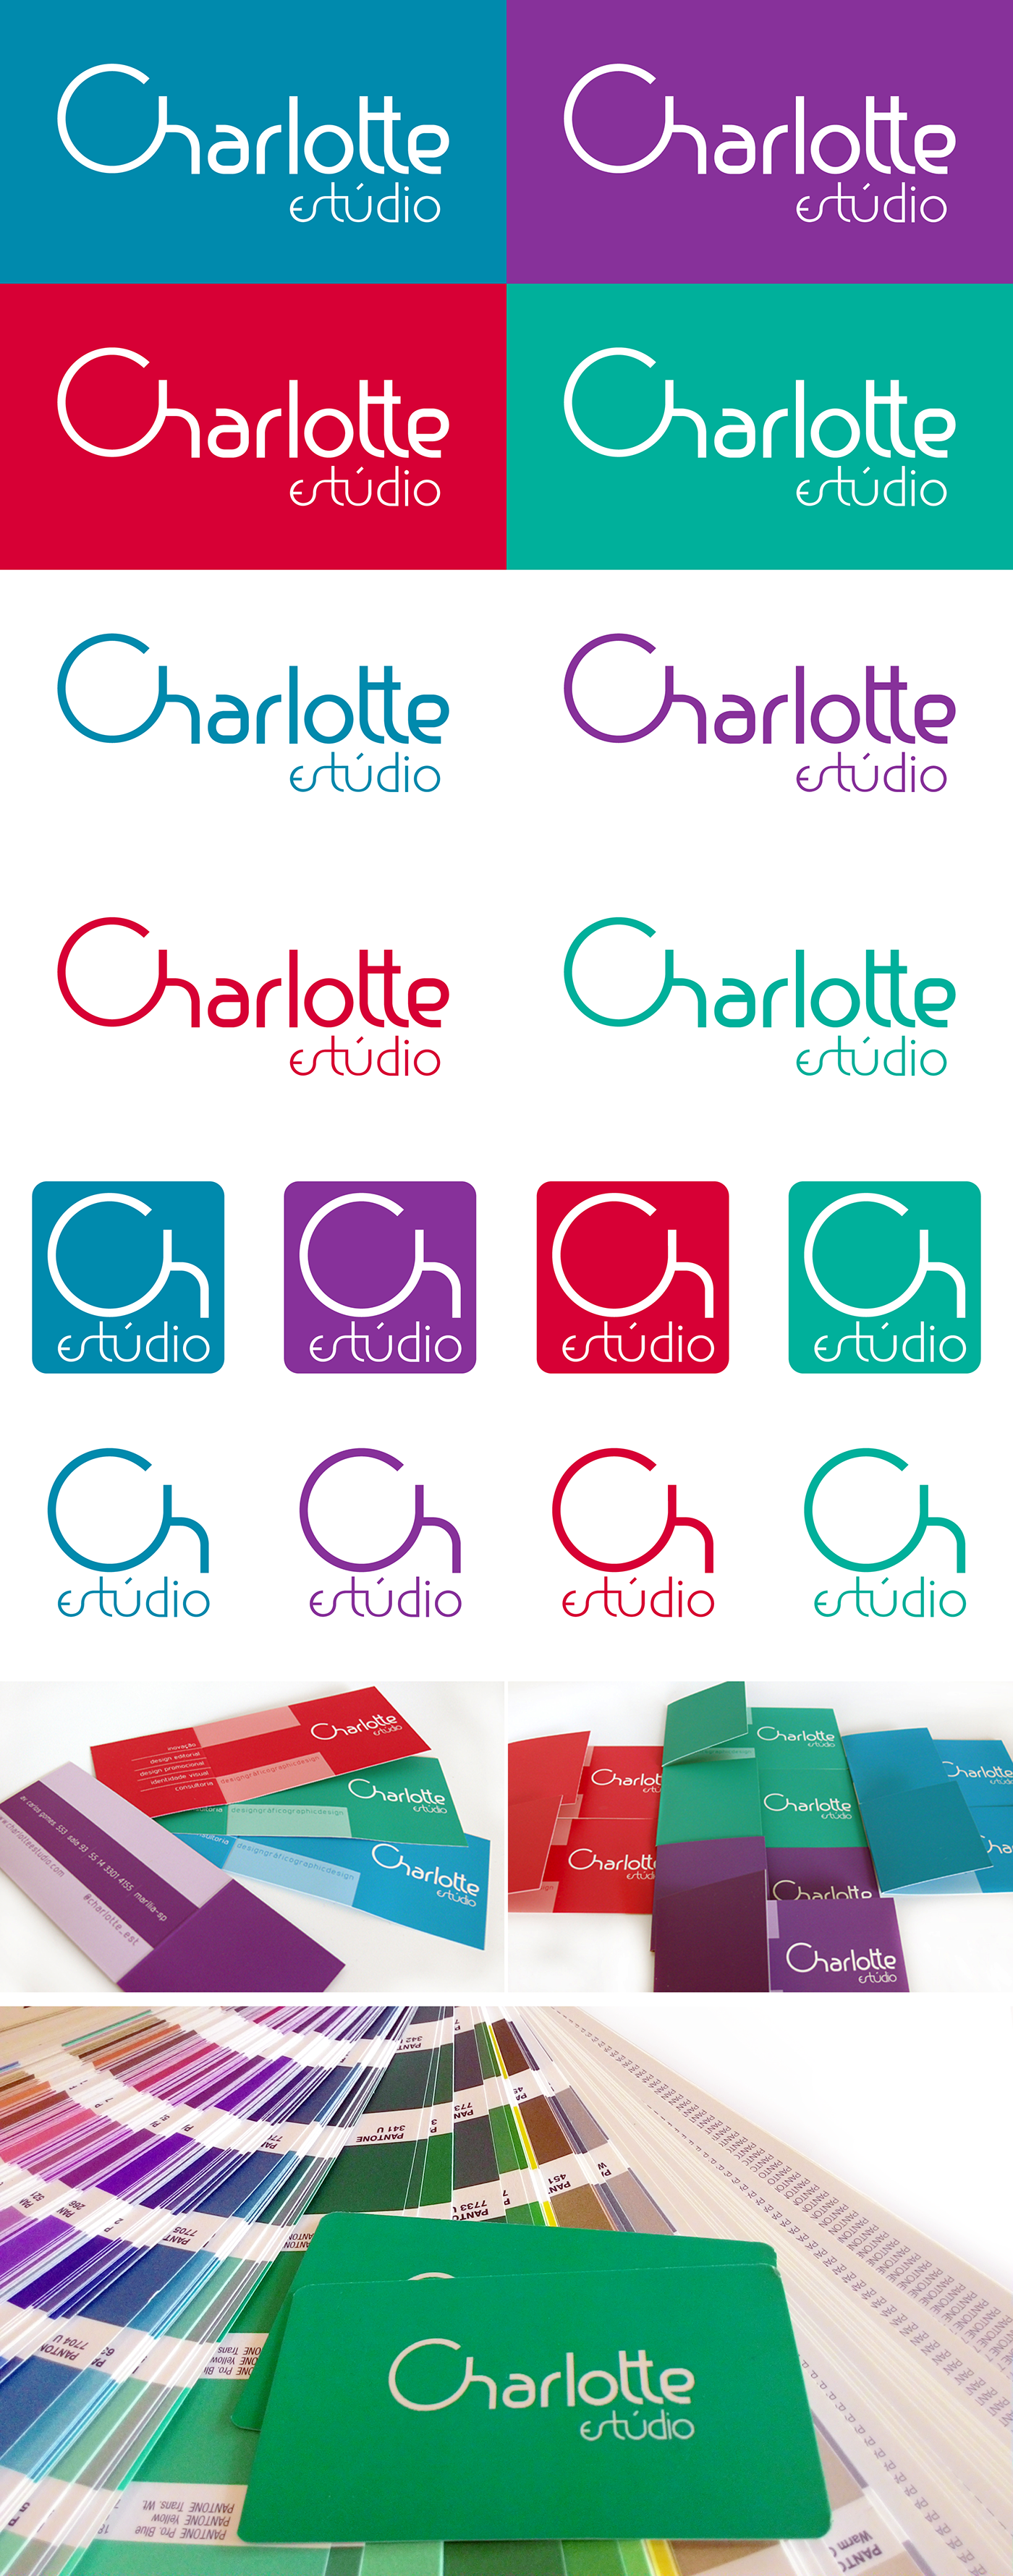 Charlotte Estúdio identidade visual tipografia marca logo